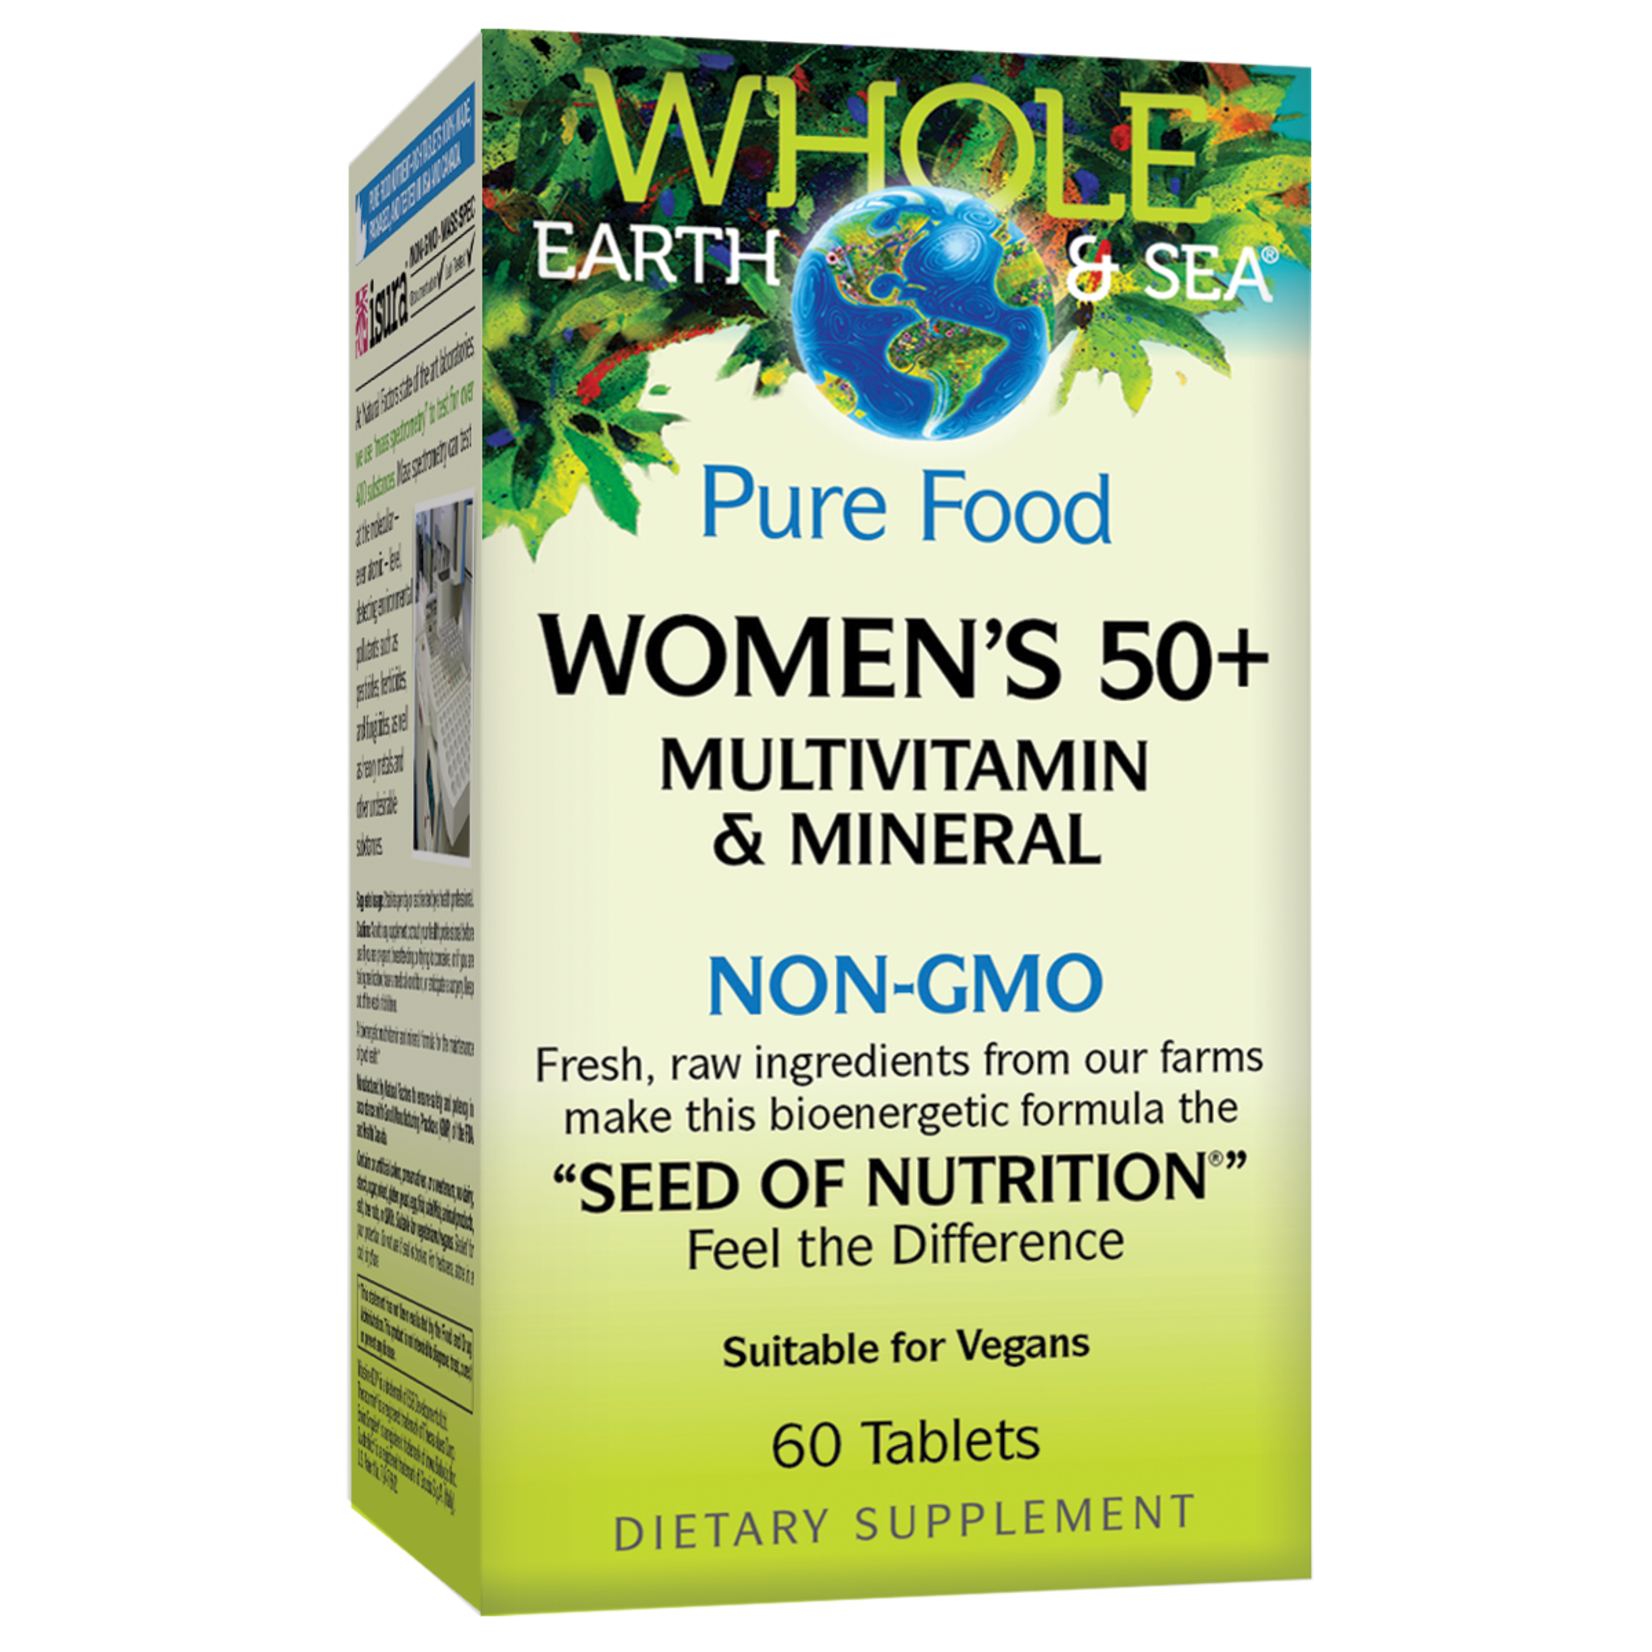 Natural Factors Natural Factors - Whole Earth & Sea Womens 50+ Multivitamin & Mineral - 60 Tablets